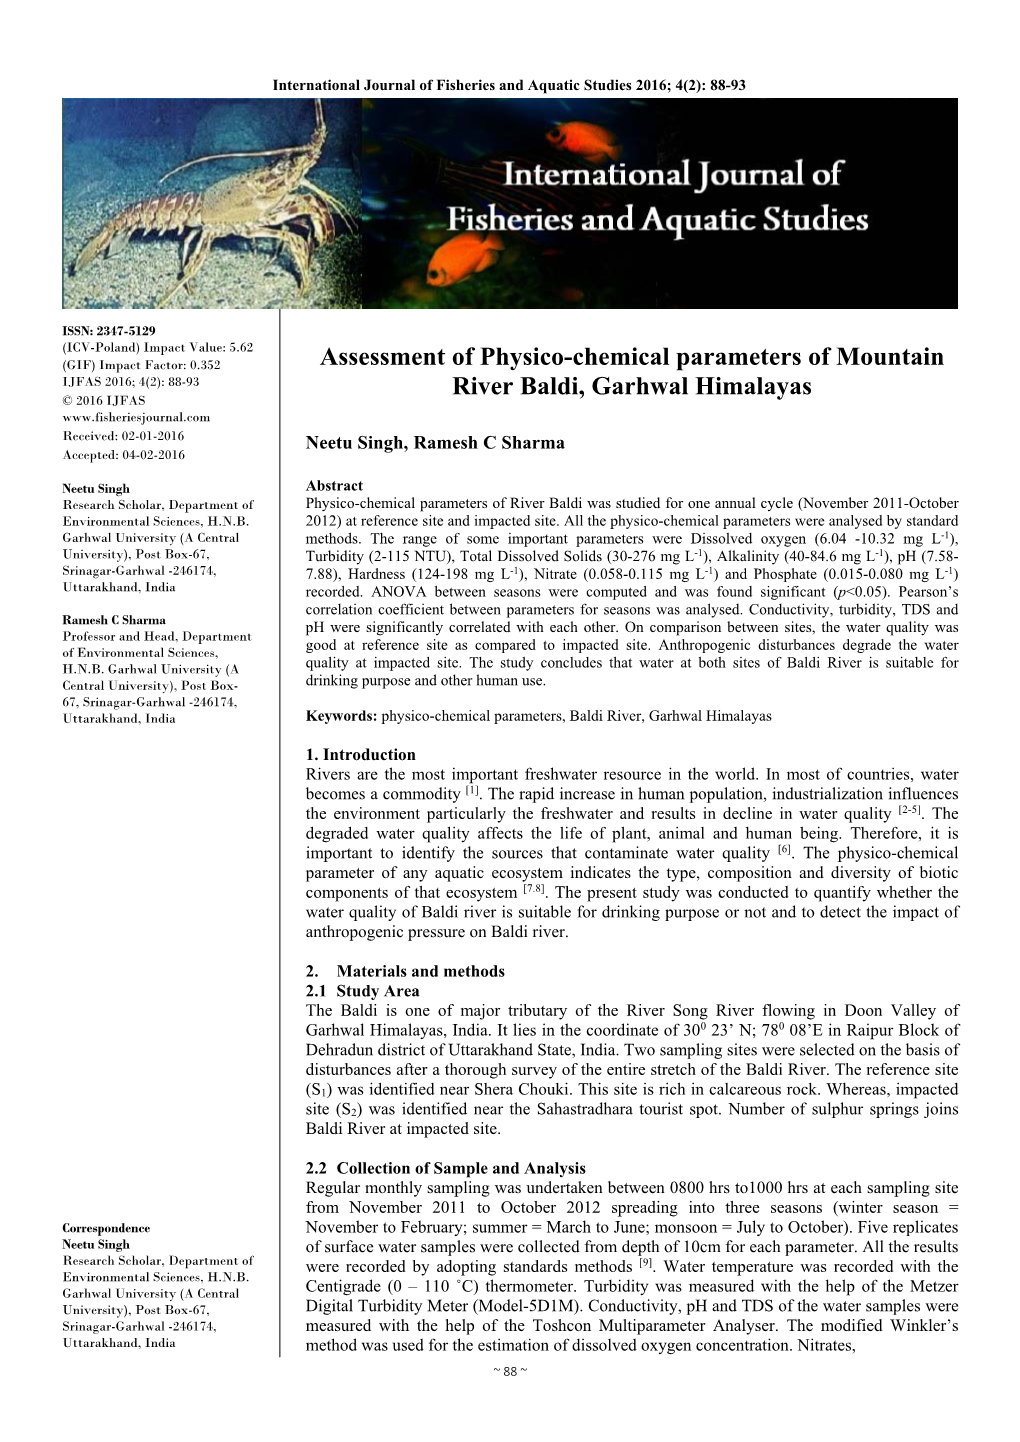 Assessment of Physico-Chemical Parameters of Mountain River Baldi, Garhwal Himalayas